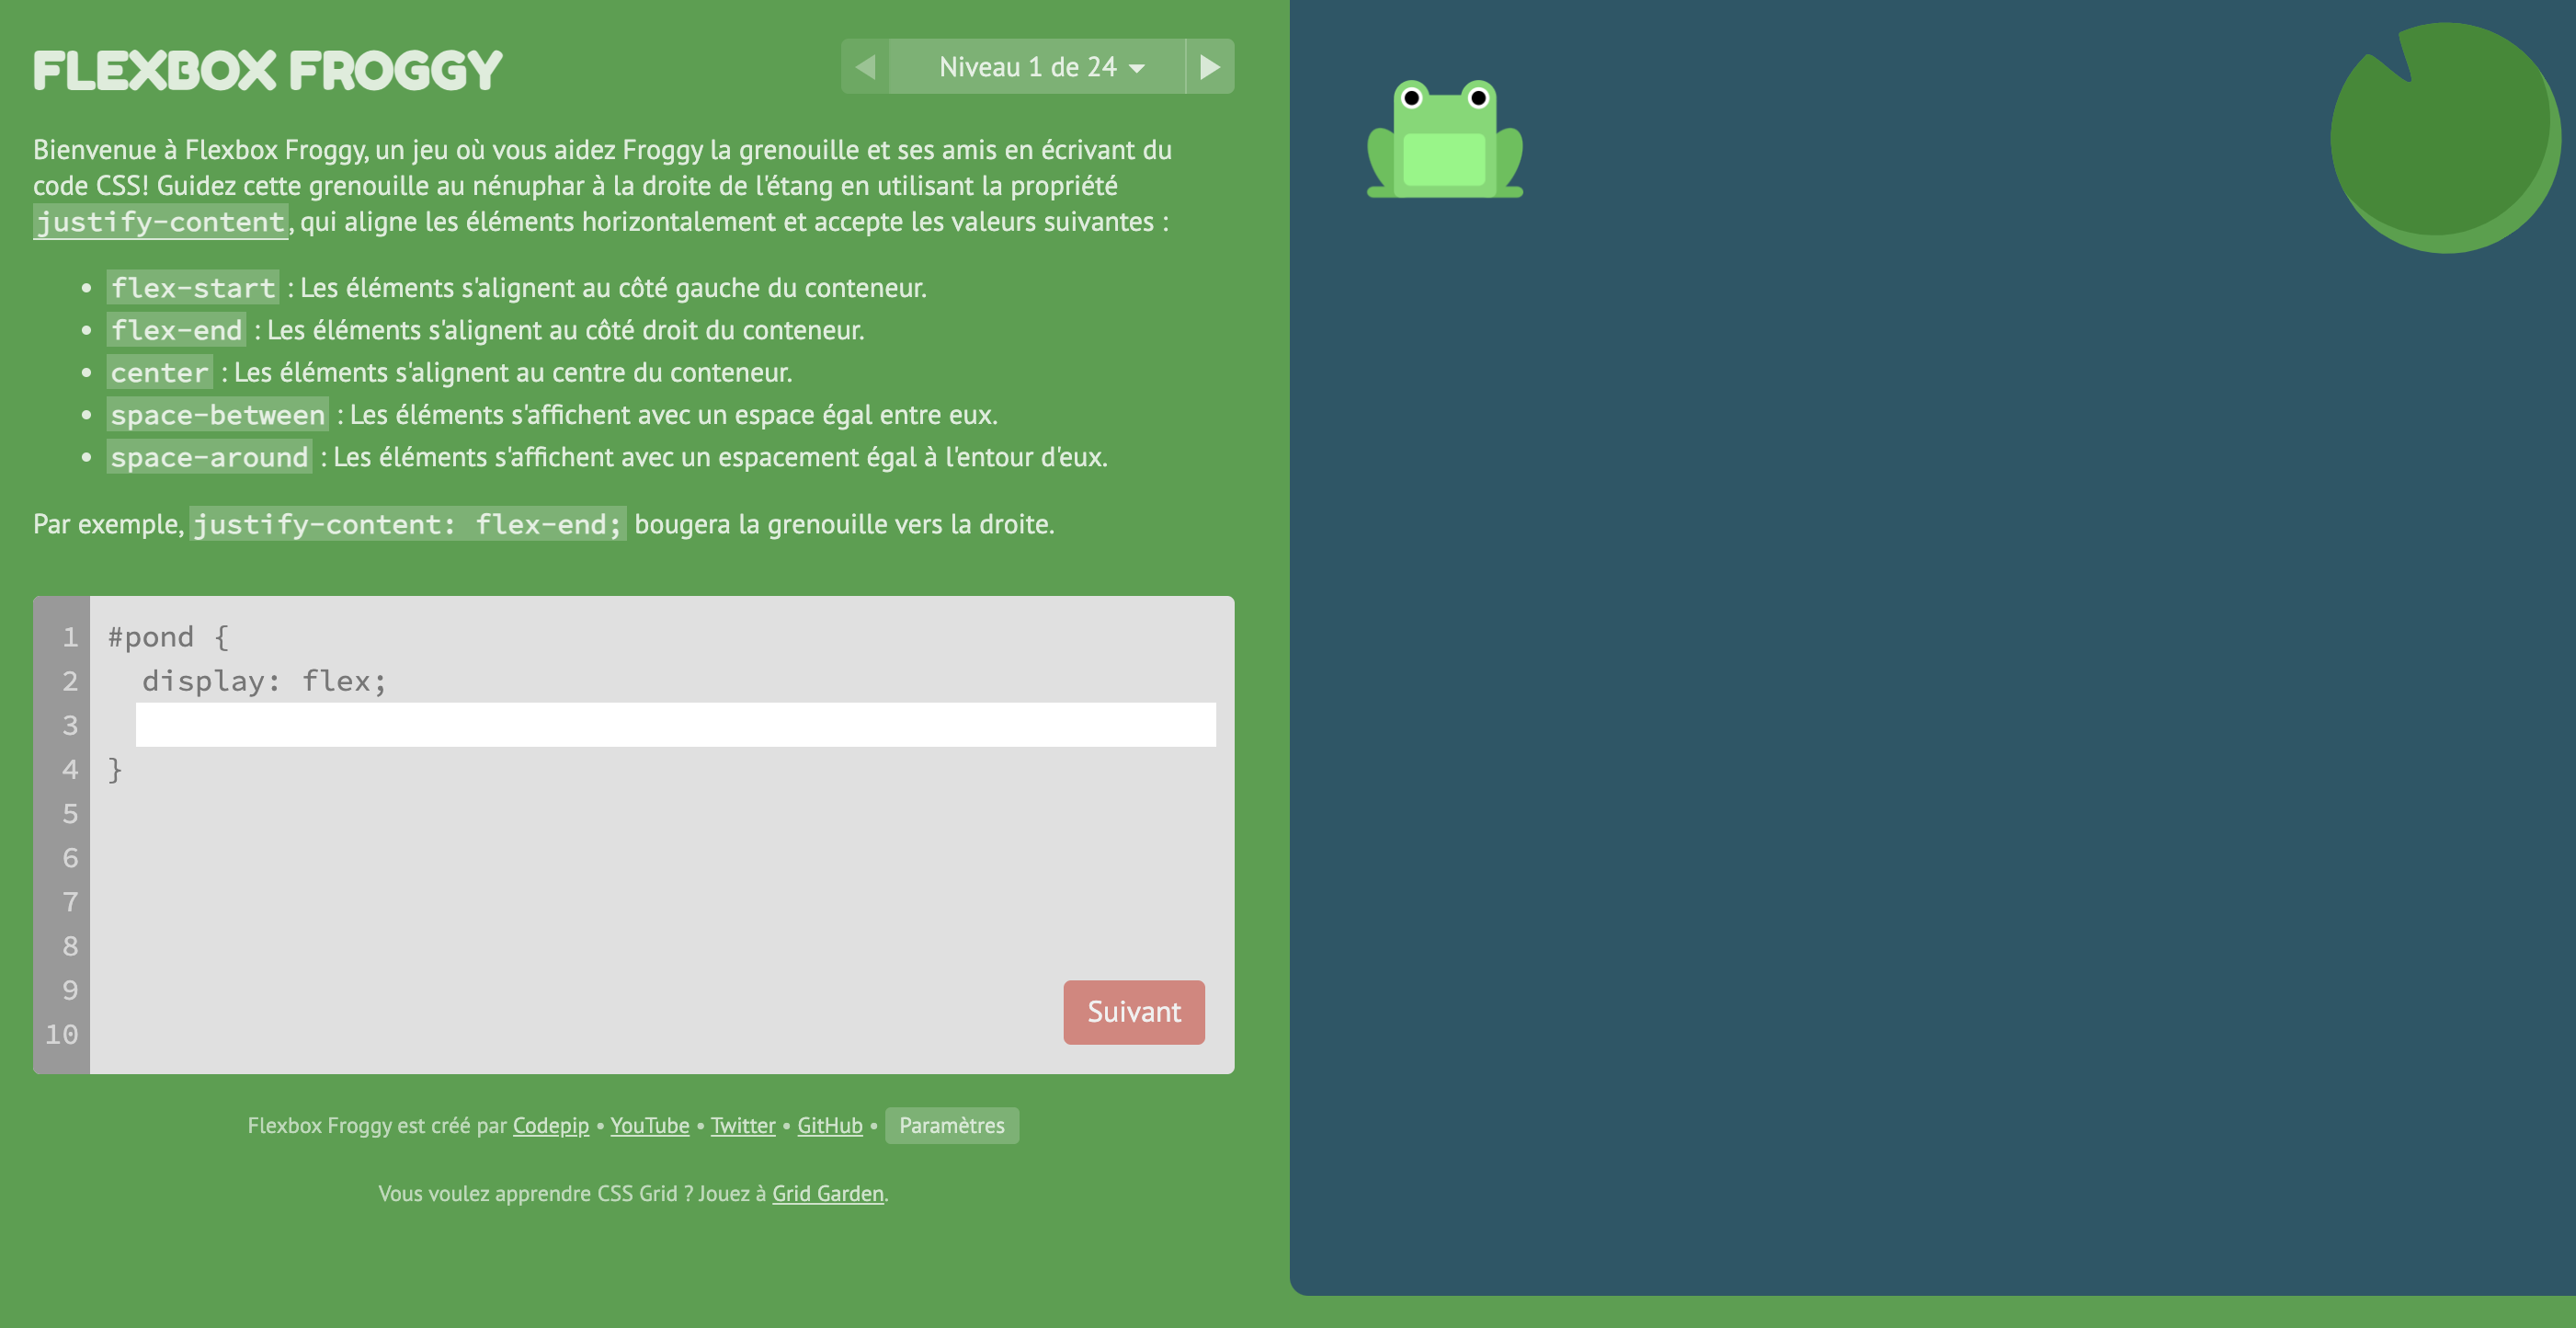 Page d'accueil de flexbox froggy